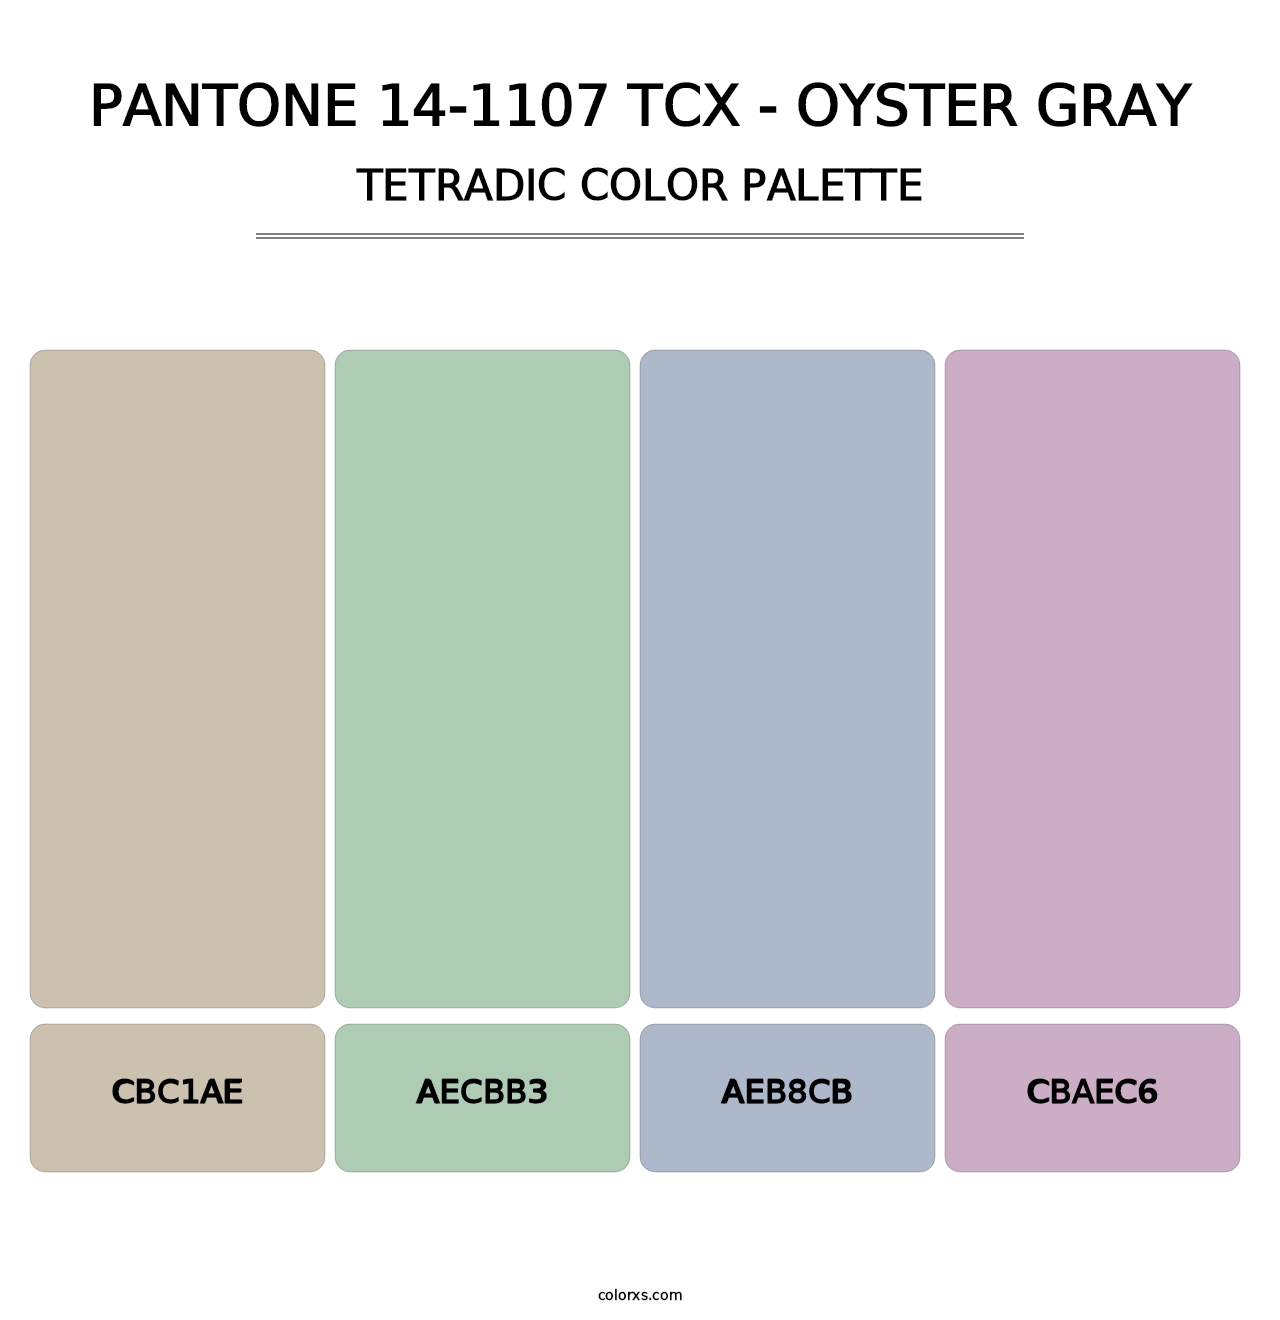 PANTONE 14-1107 TCX - Oyster Gray - Tetradic Color Palette